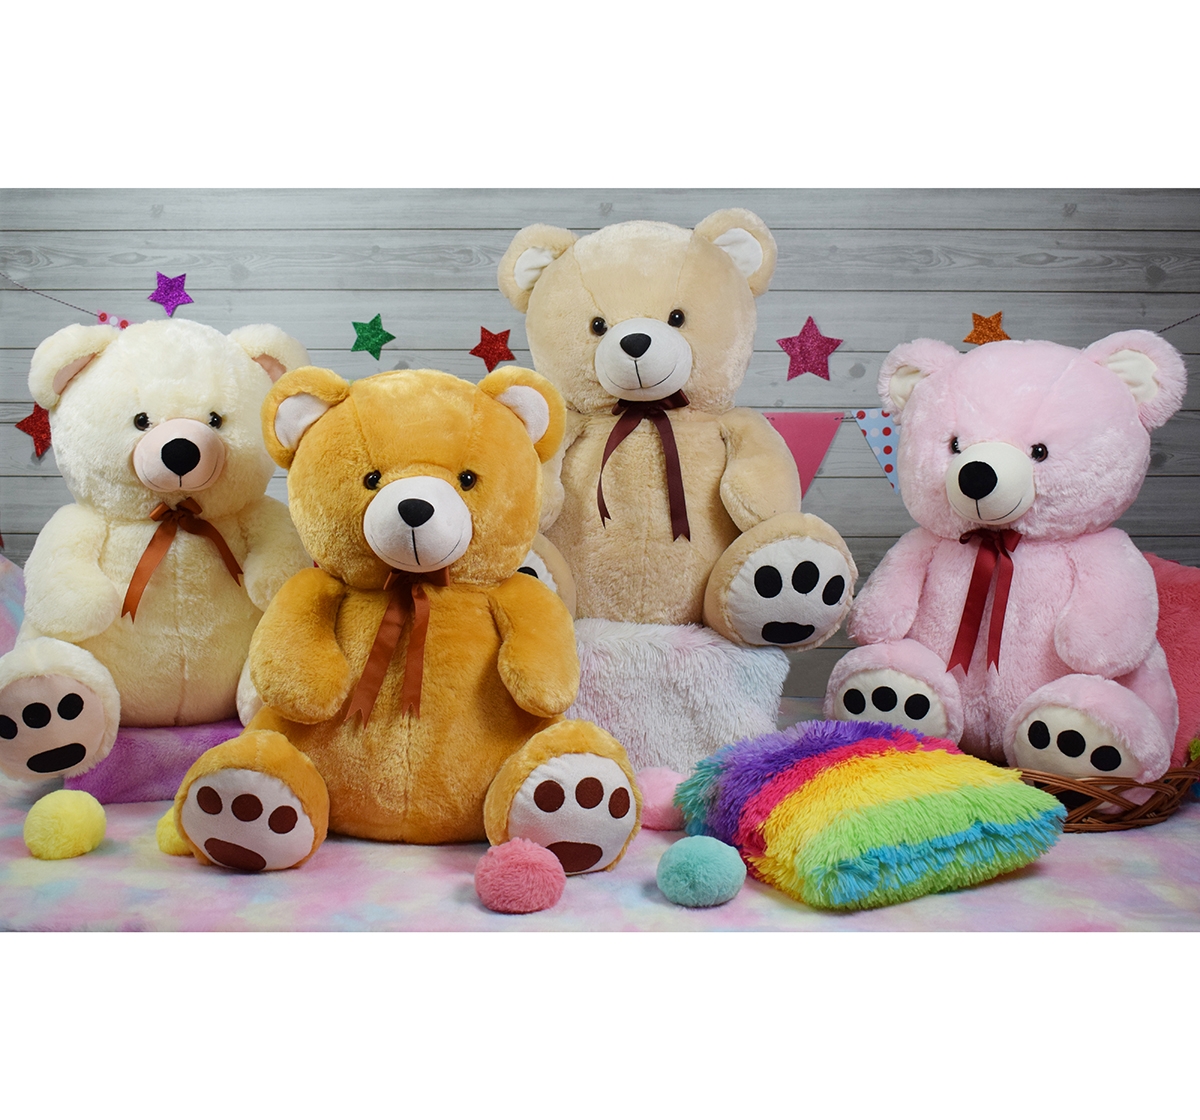 Mirada | Mirada 55cm jumbo teddy bear soft toy Multicolor 3Y+ 2